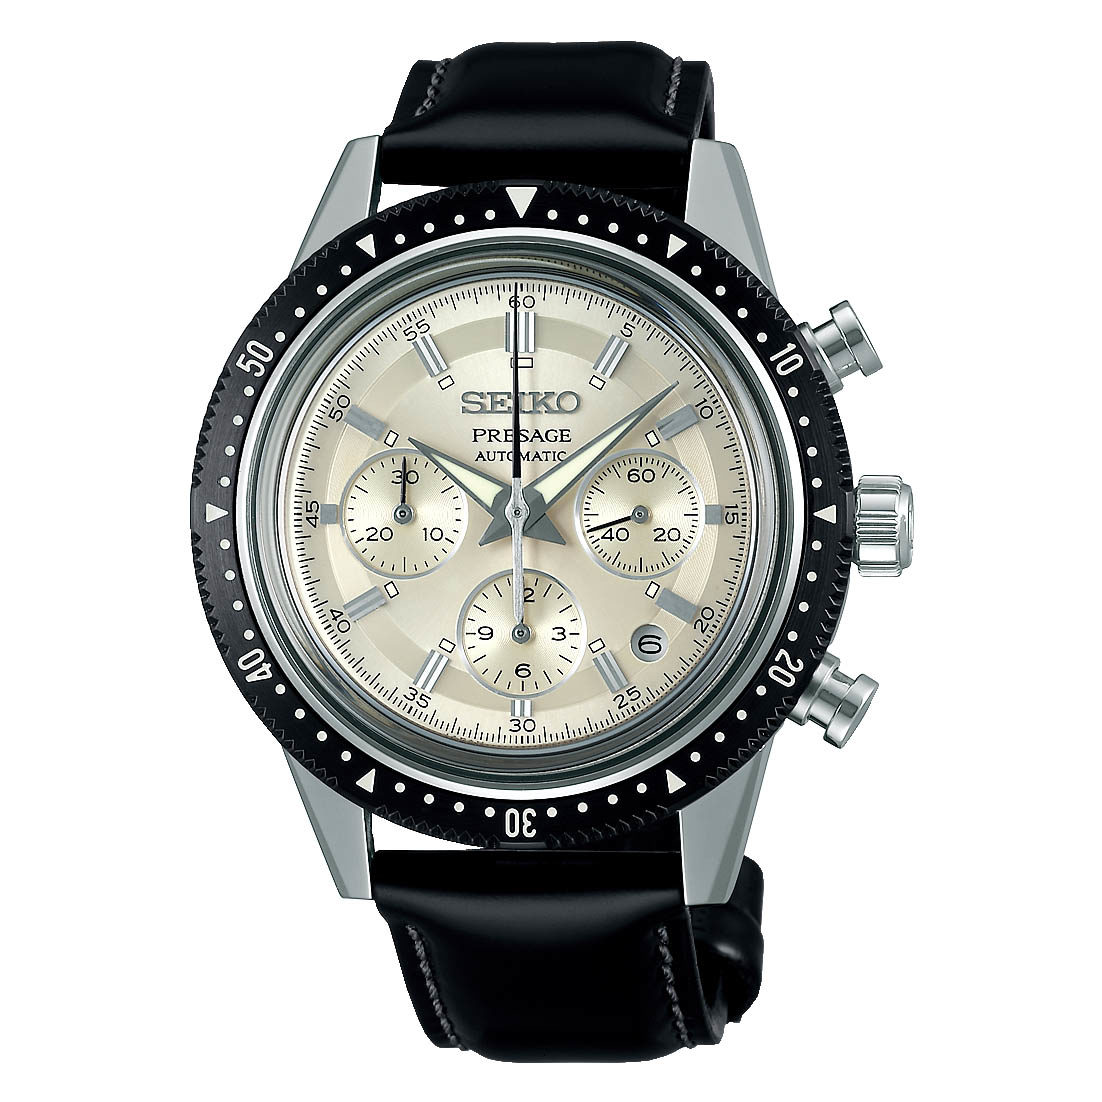 Seiko Presage Chronograph Limited Edition SRQ031J1 watches reviews